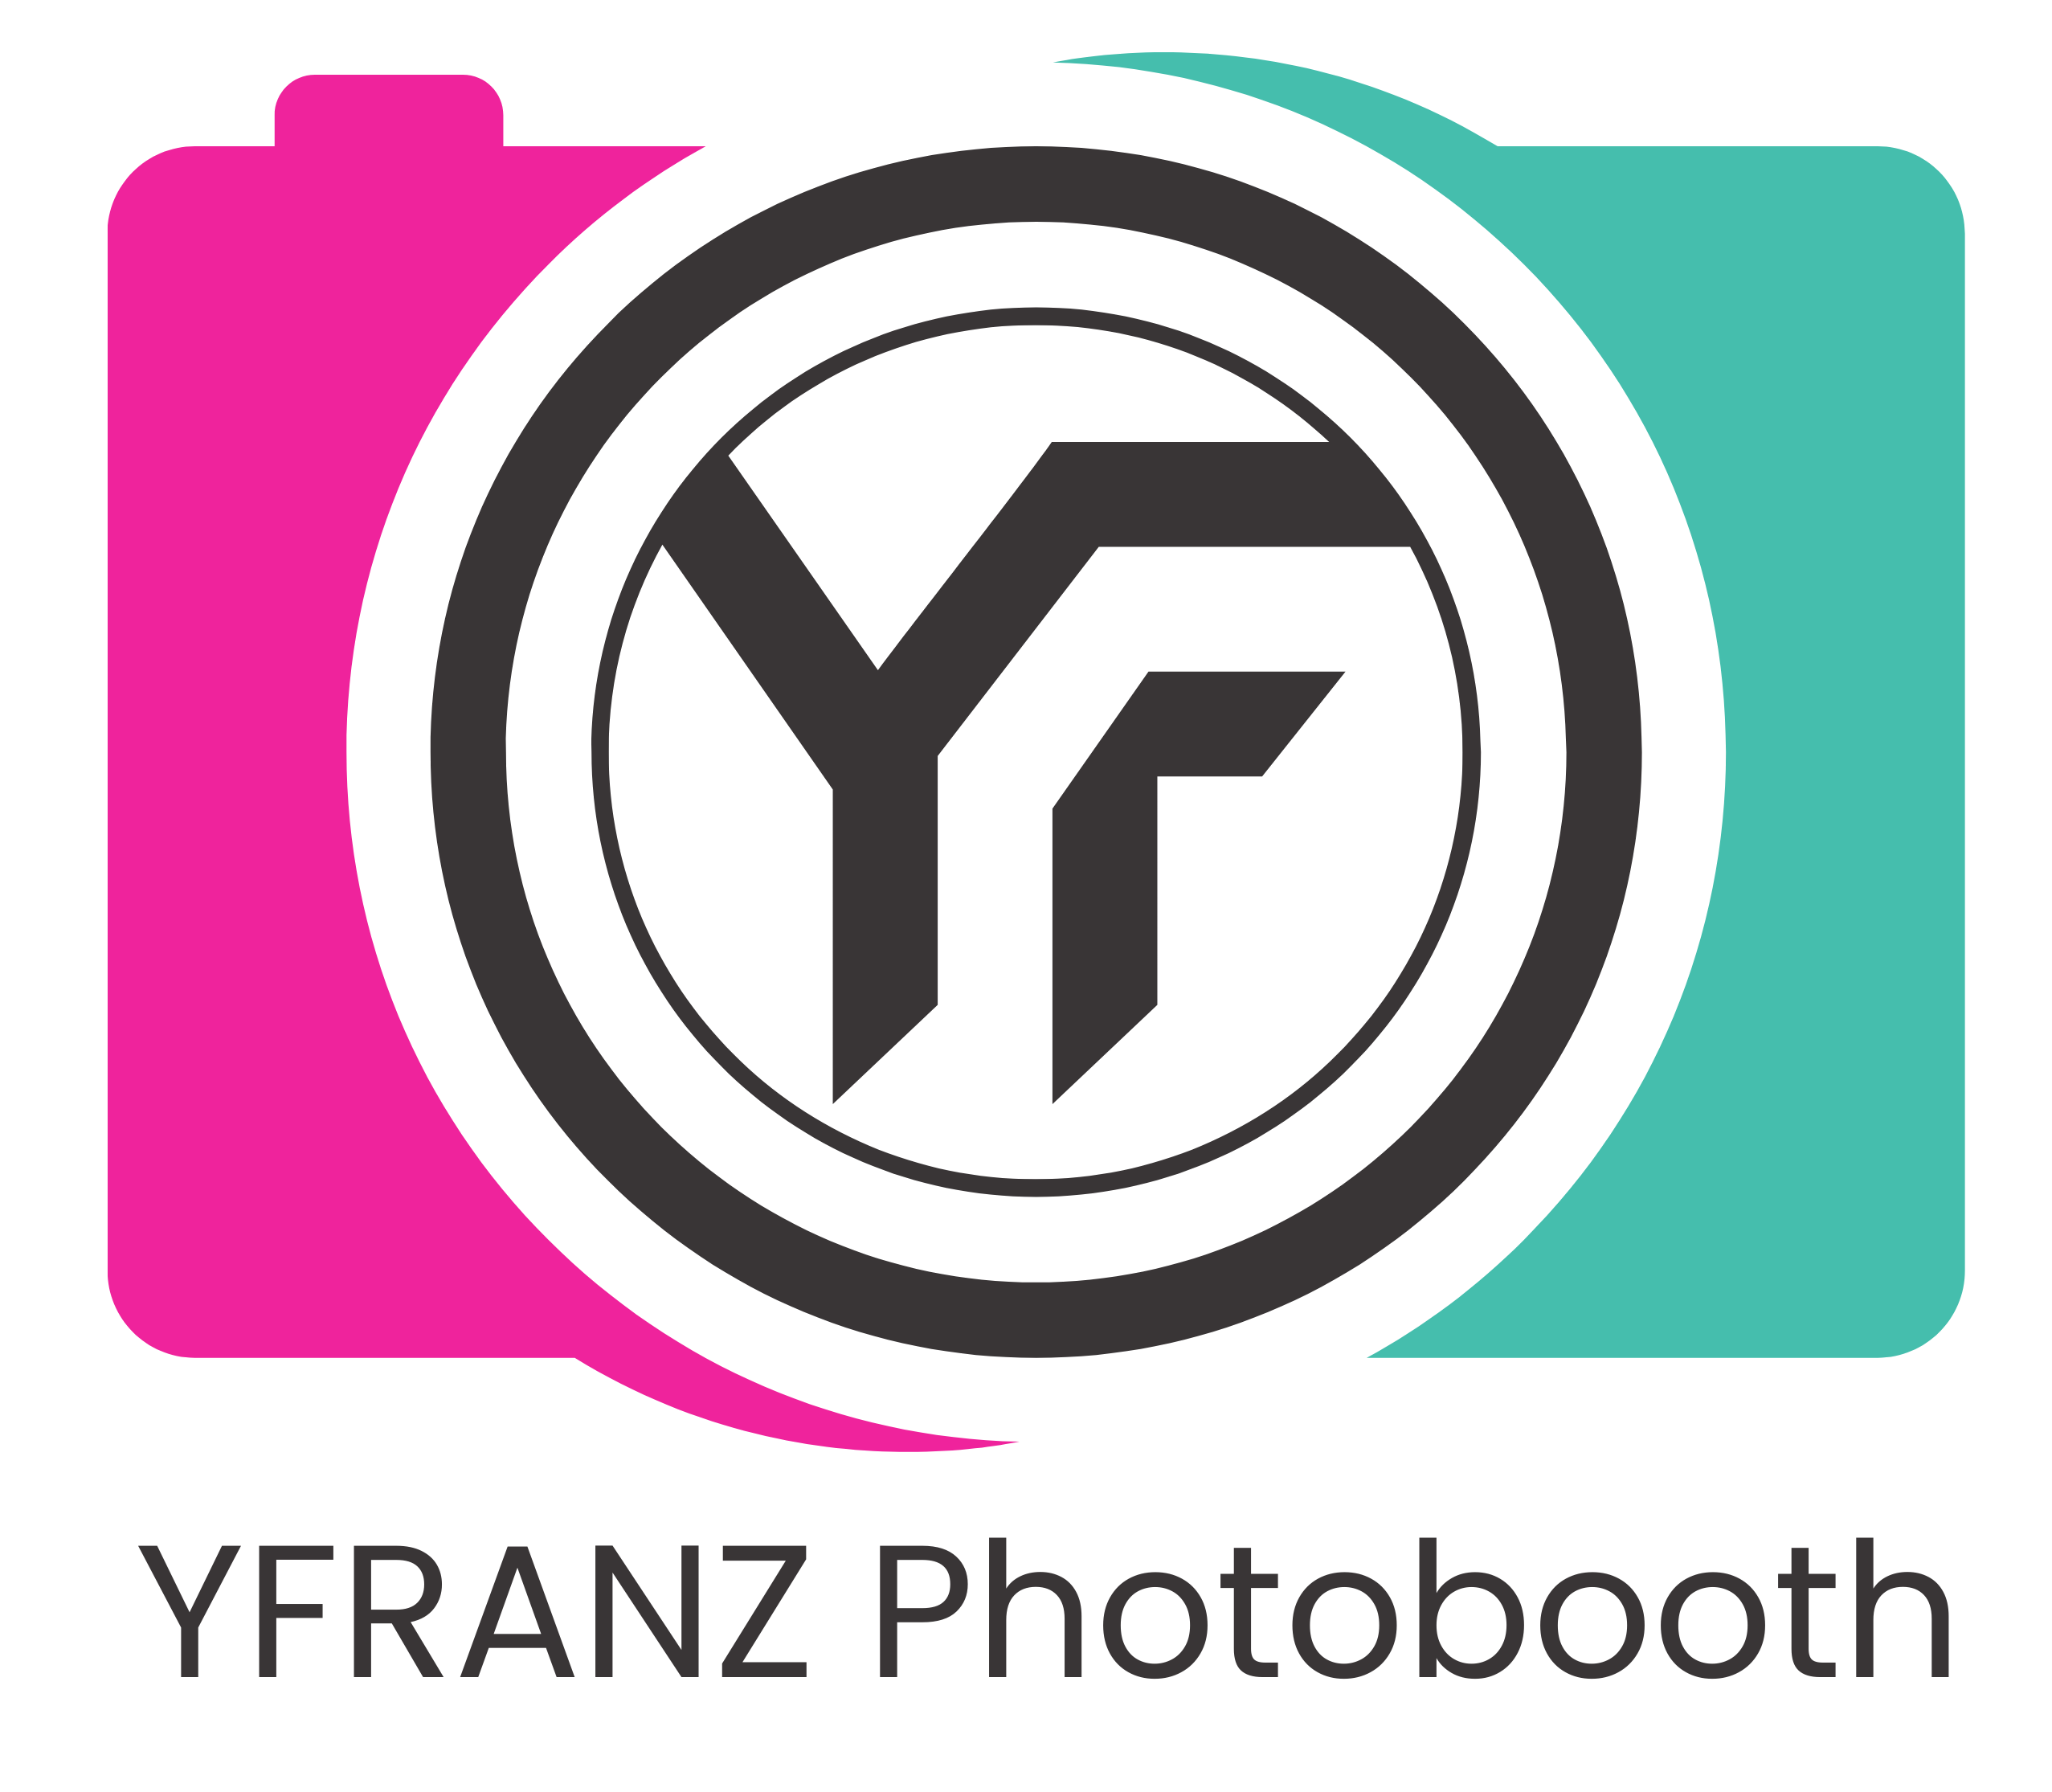 YFranz Photobooth